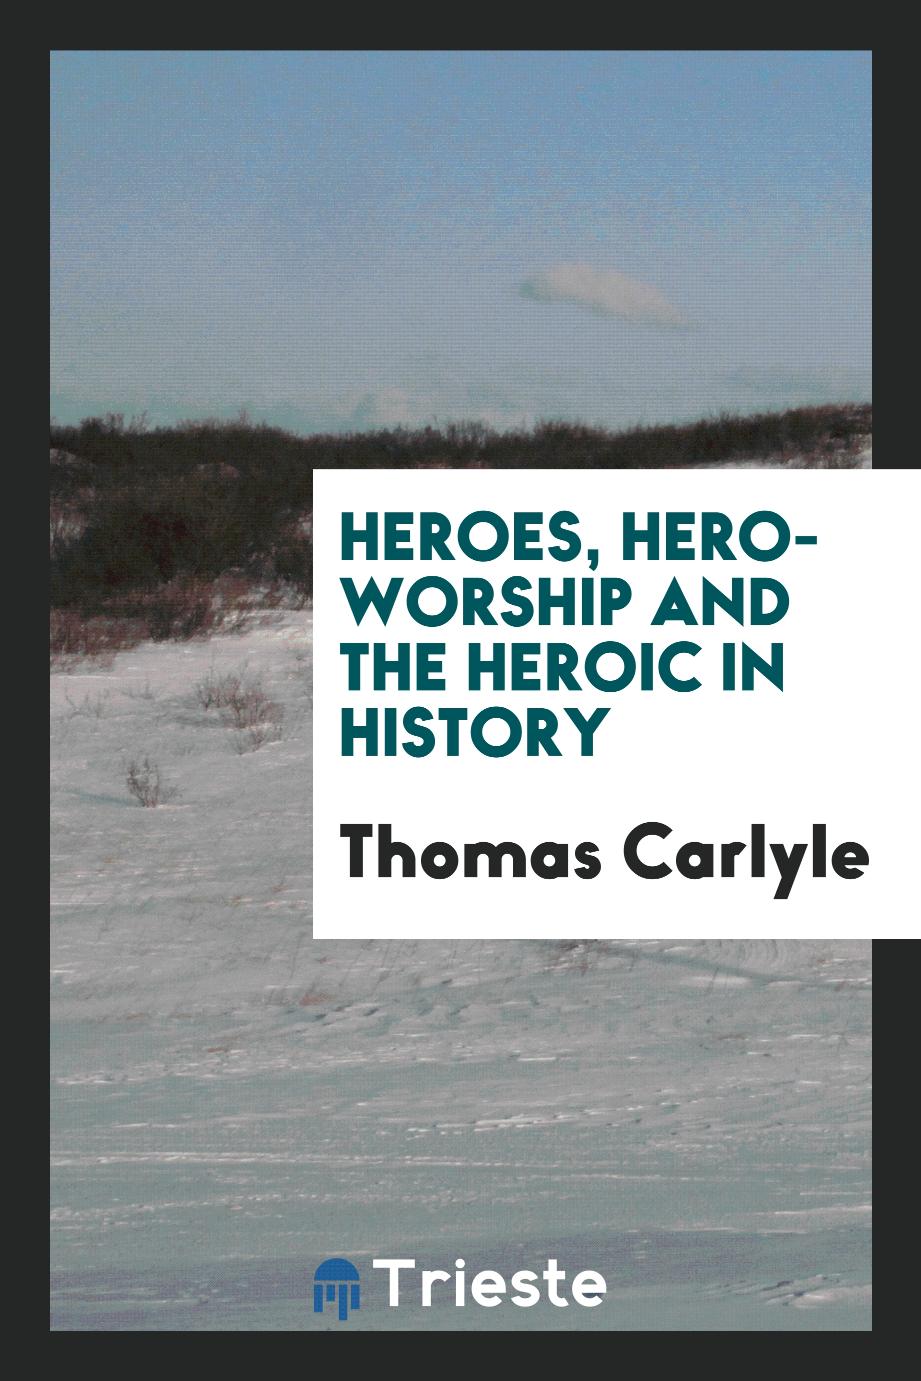 Heroes, hero-worship and the heroic in history